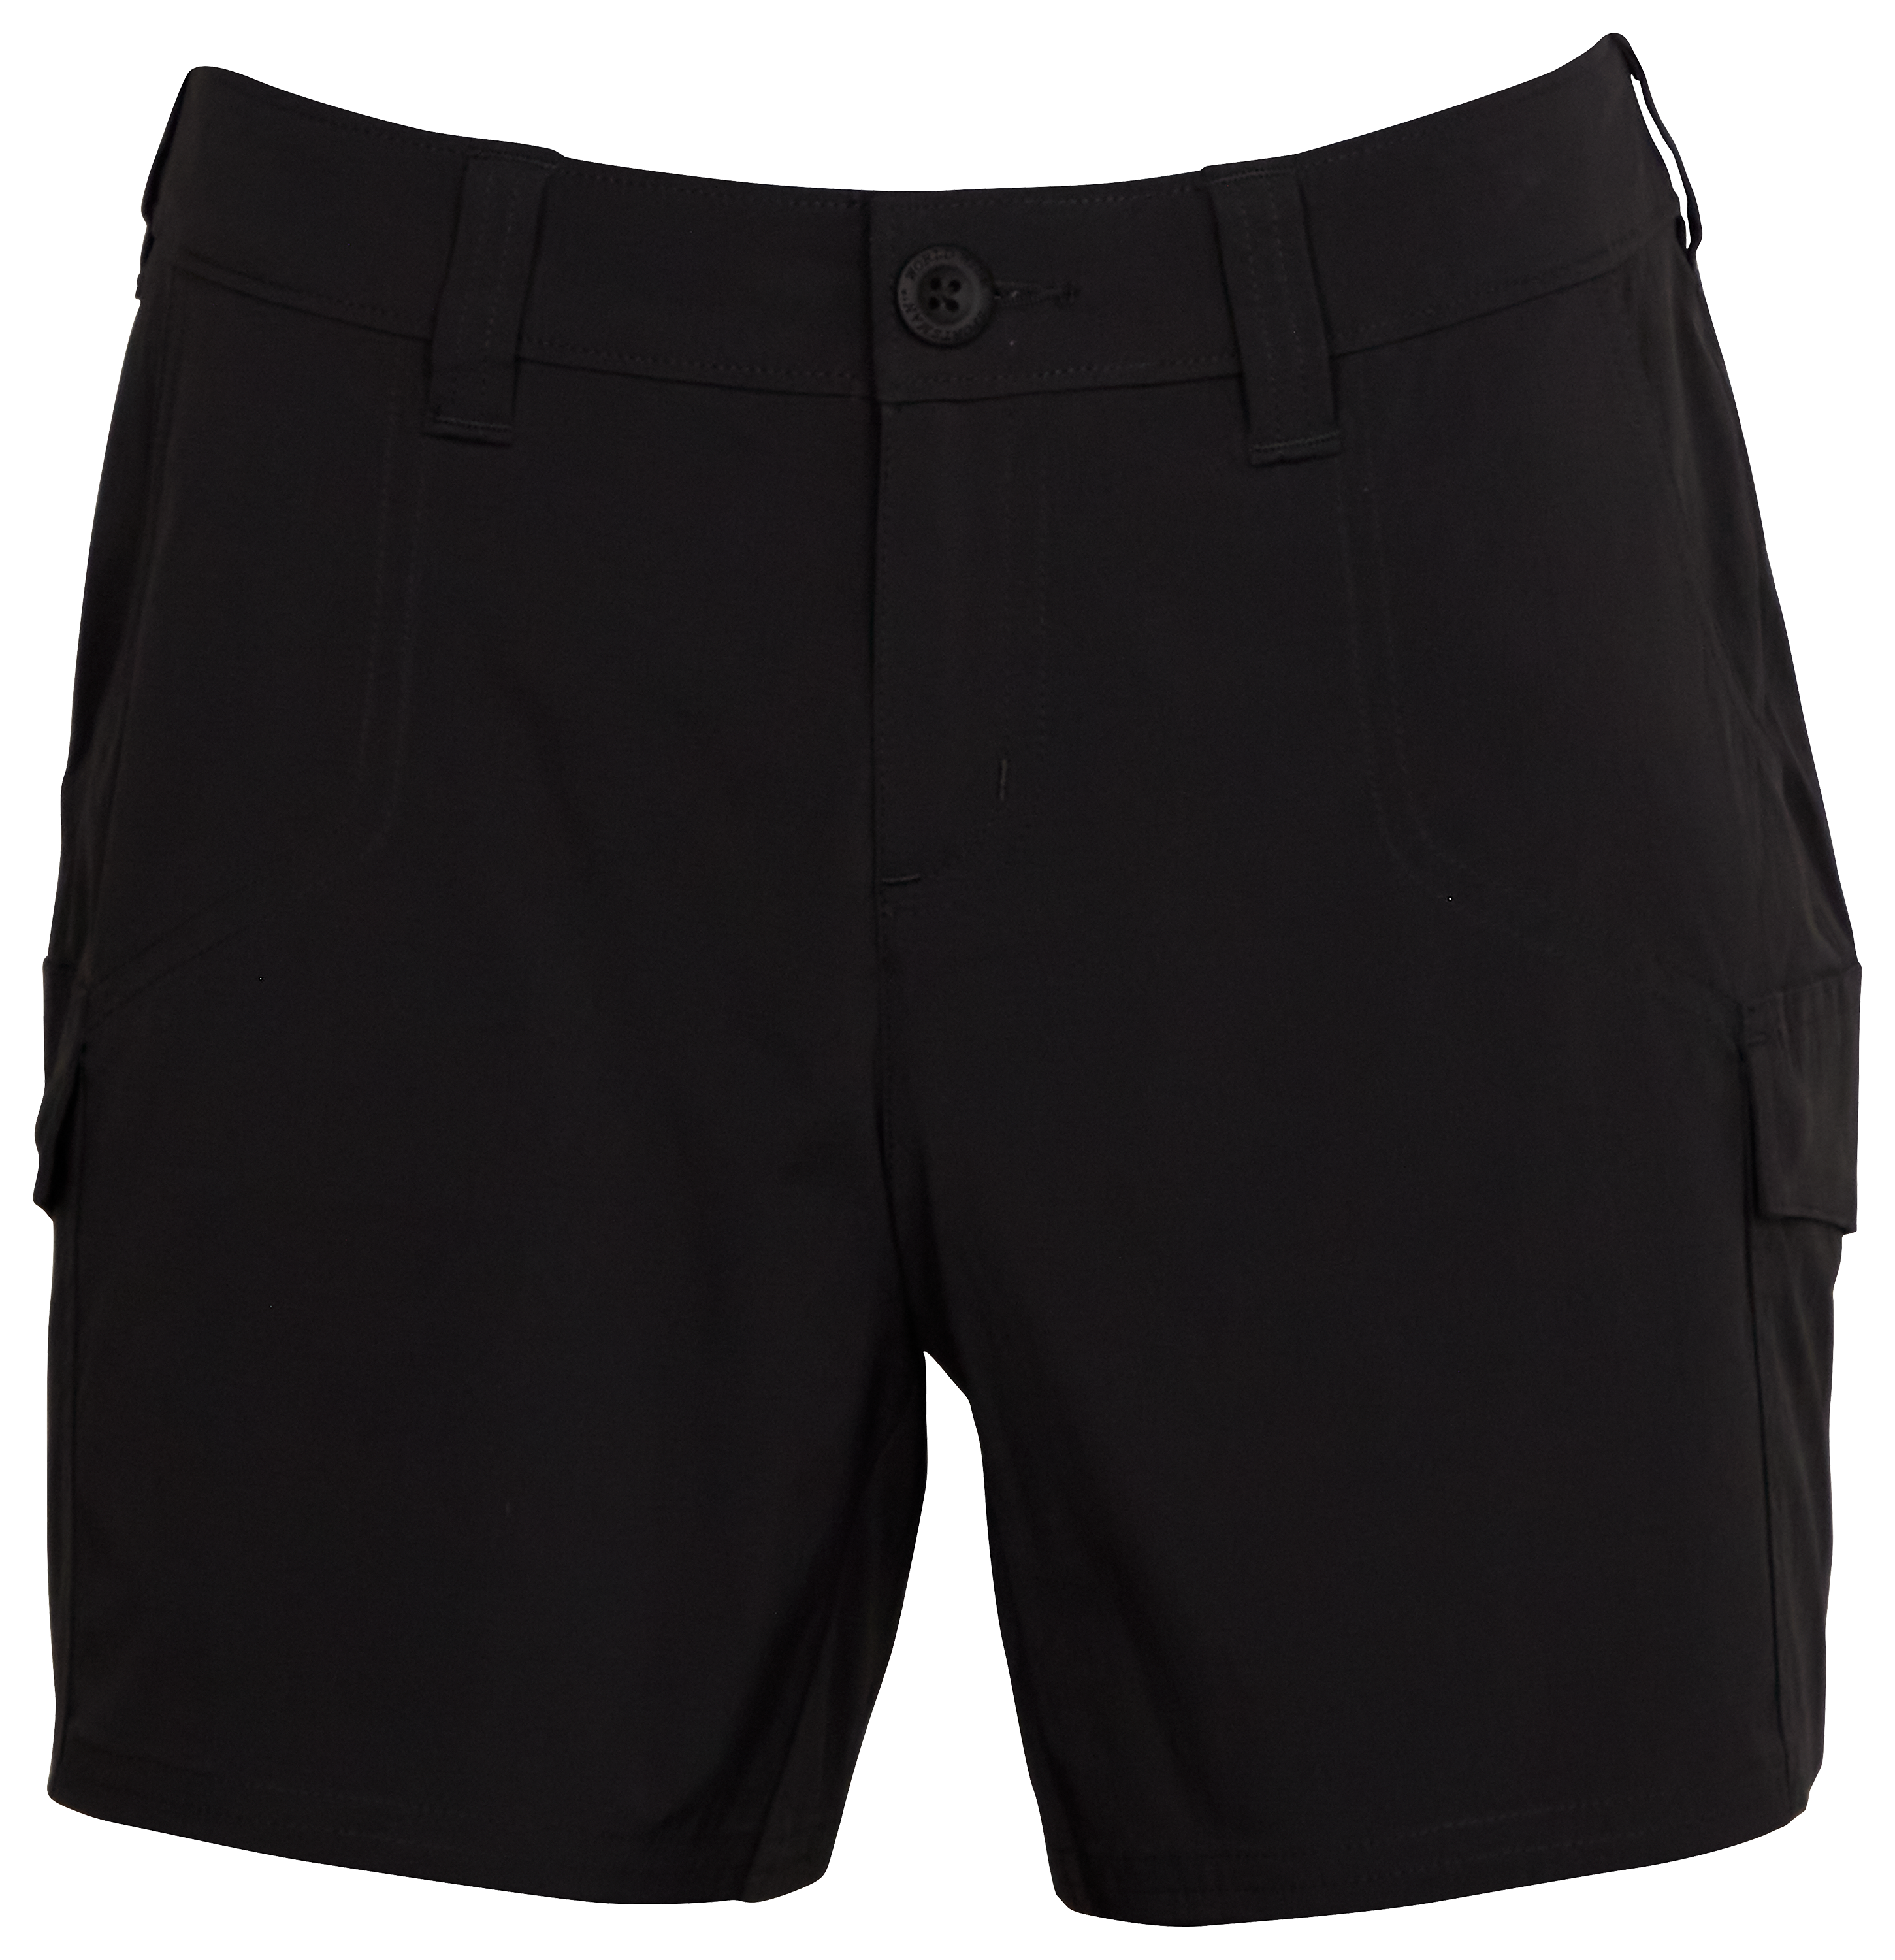 World Wide Sportsman Ripstop Cargo Shorts for Ladies - Jet Black - 8